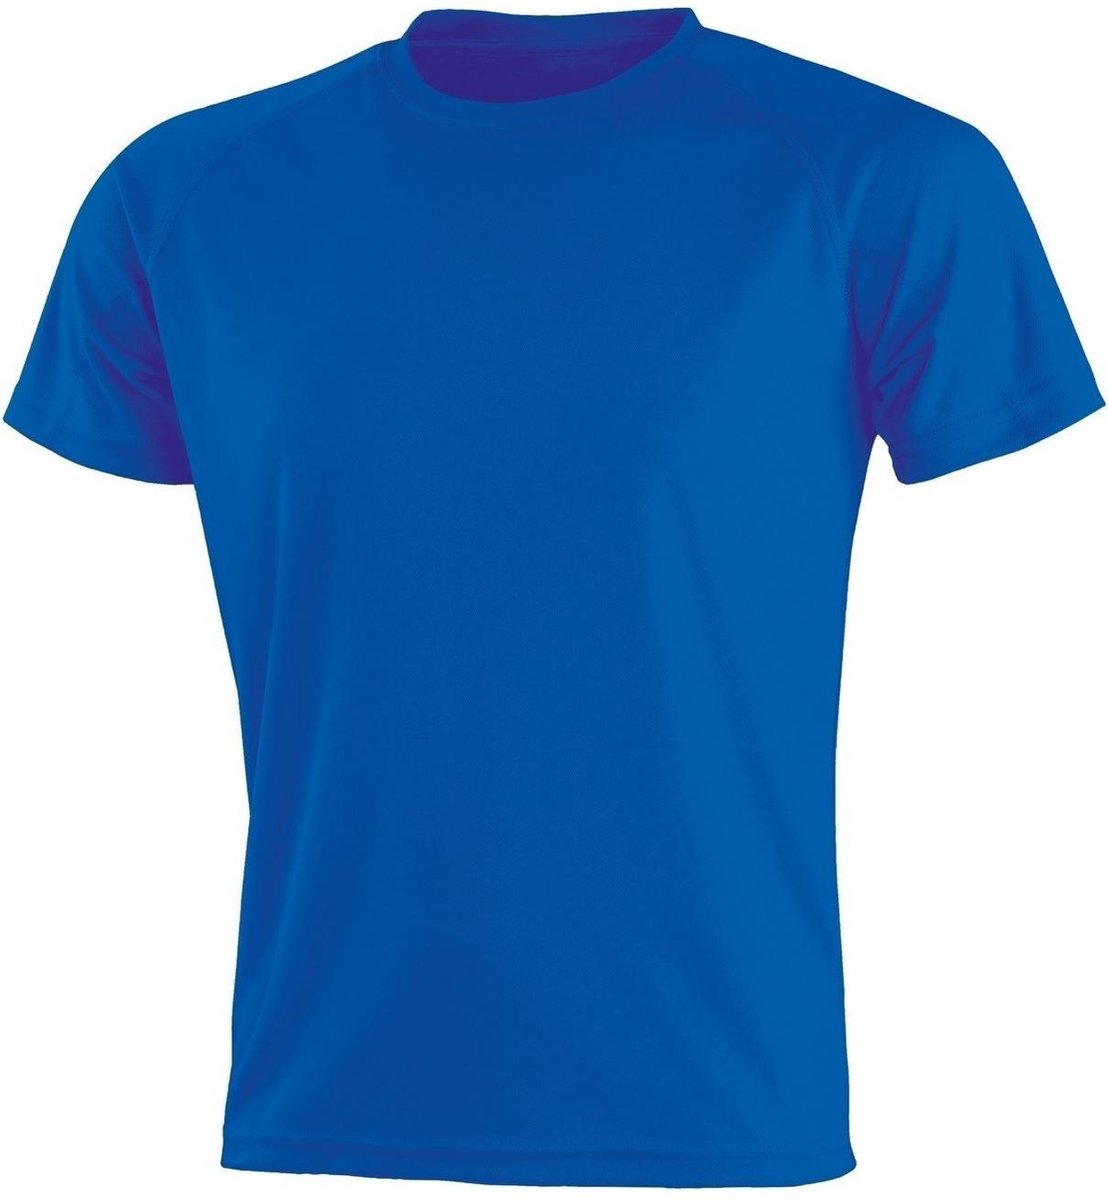 Senvi Sports Performance T-Shirt- Royal - 3XL - Unisex